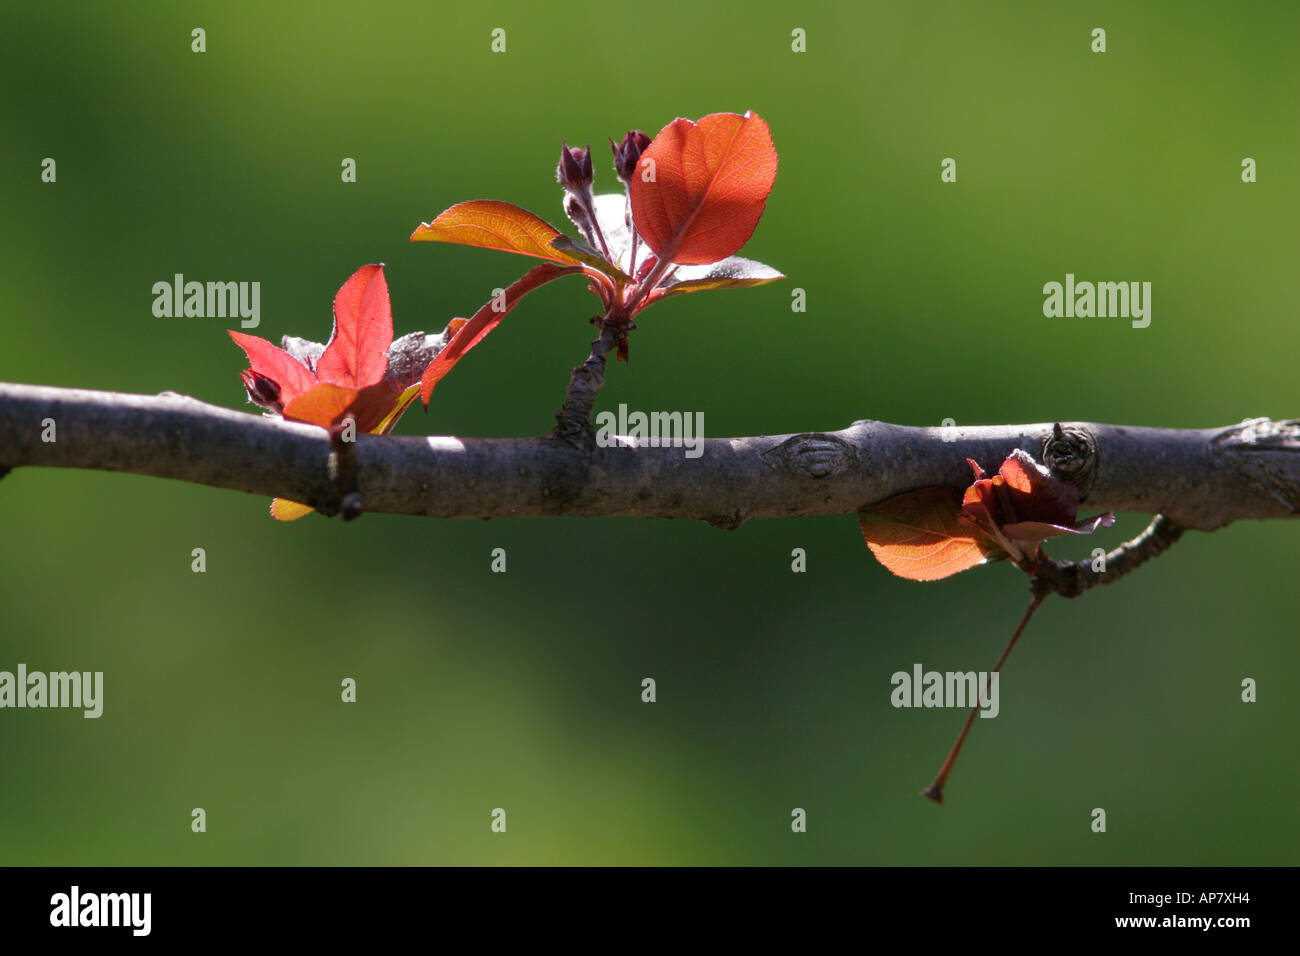 p stock photo 157 7973 flowering branch of cardinal crabapple tree malus cardinal in spring horizontal photo Stock Photo